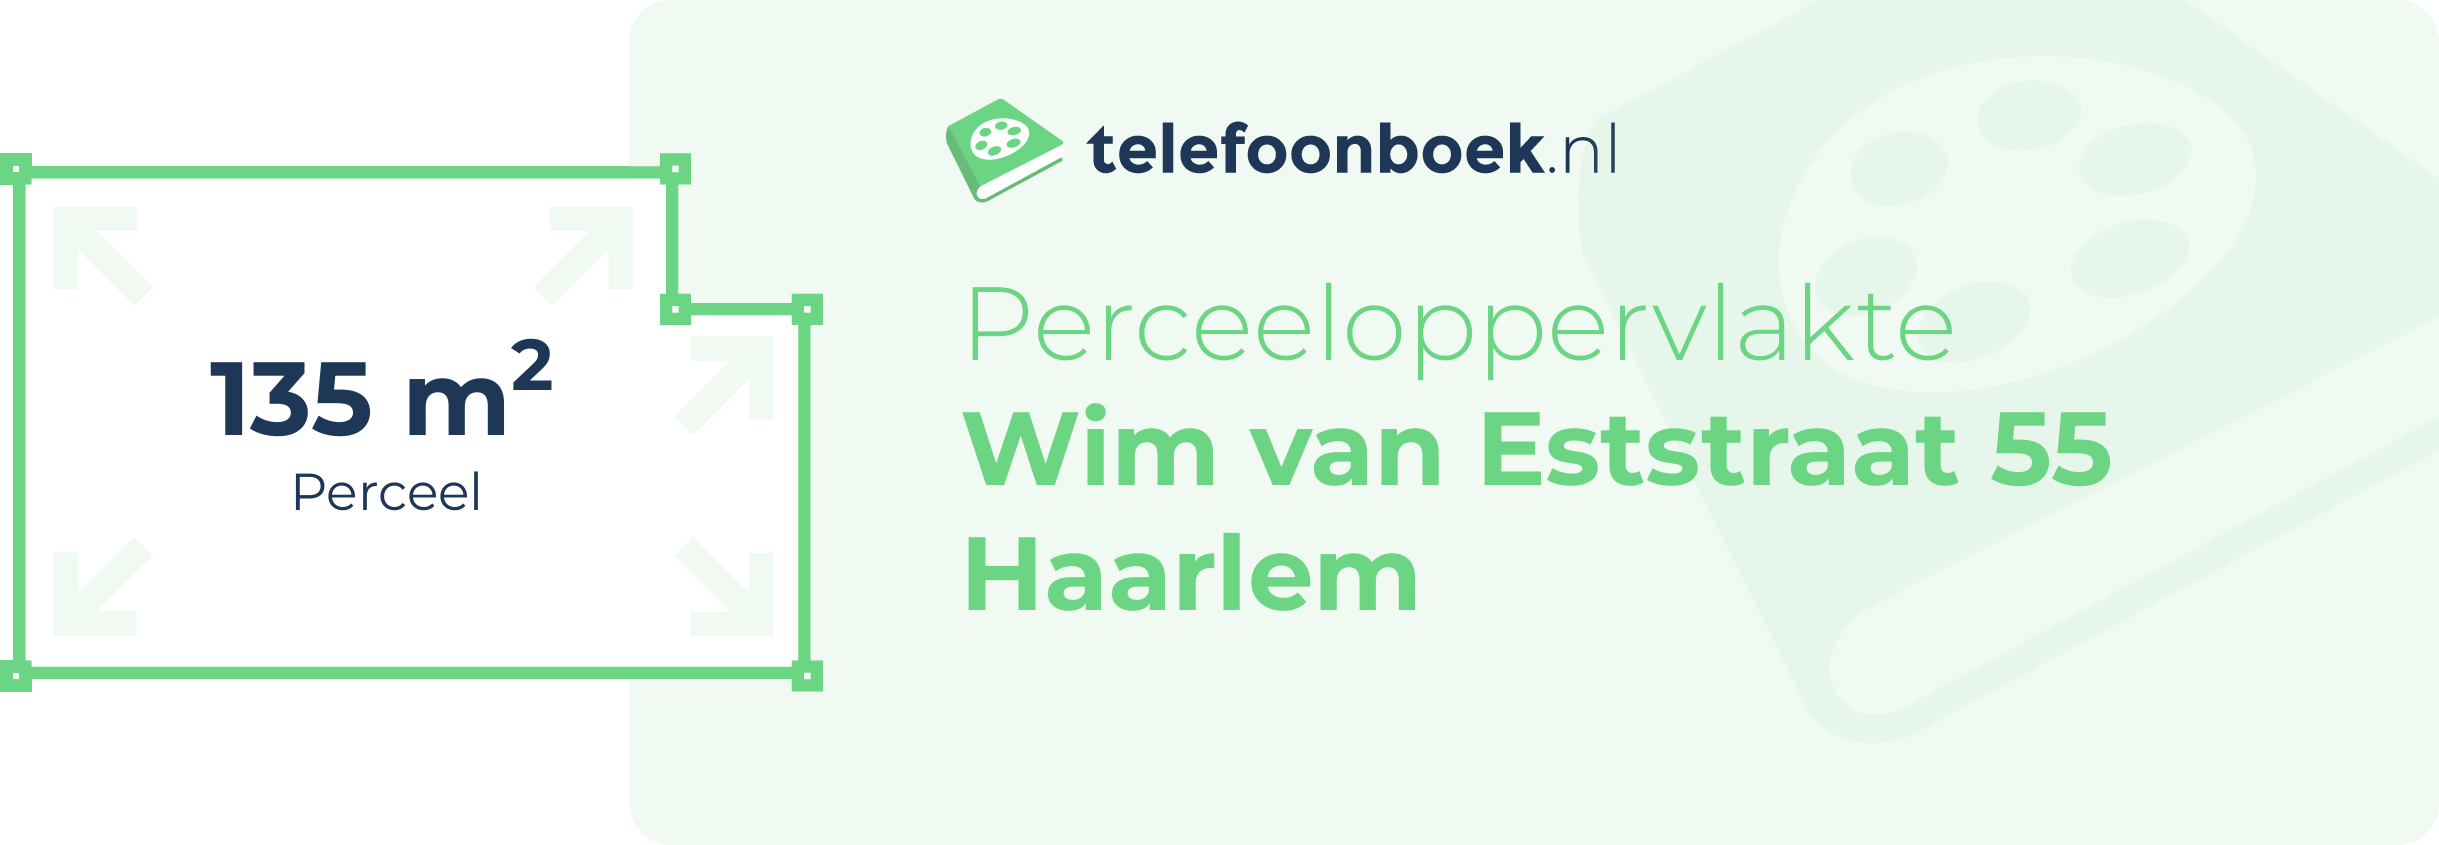 Perceeloppervlakte Wim Van Eststraat 55 Haarlem